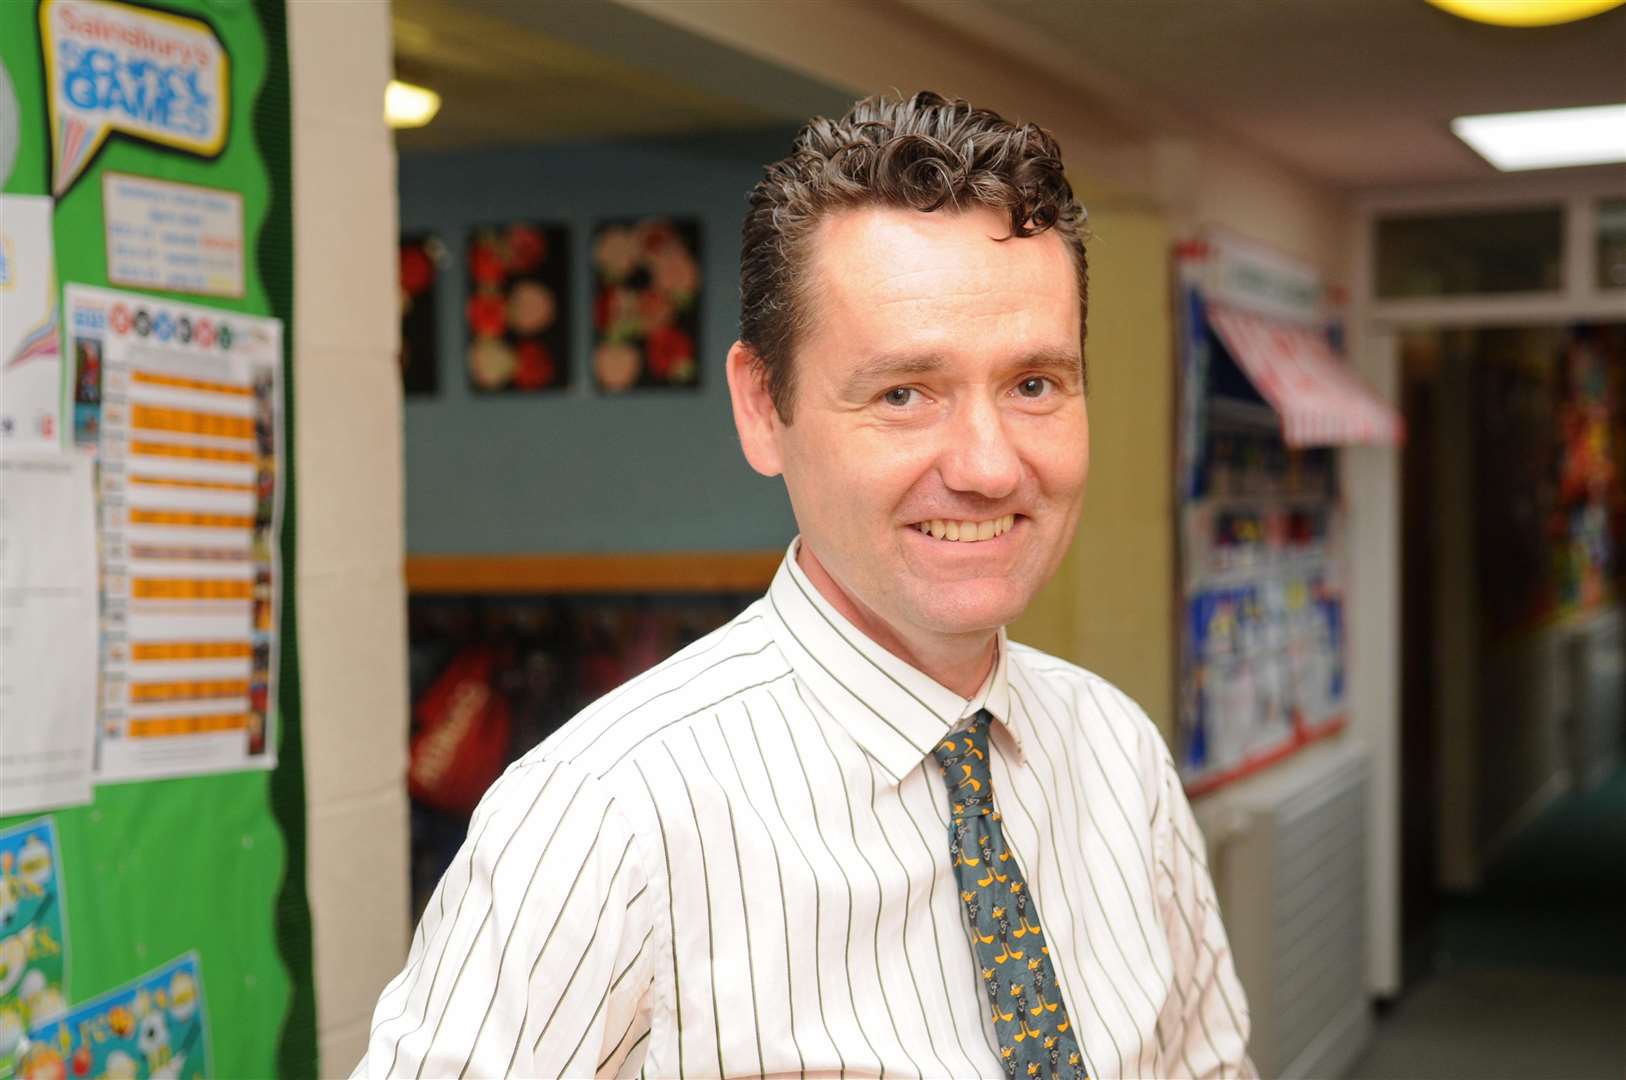 Leaving Godinton Primary School - popular teacher Peter Hygate